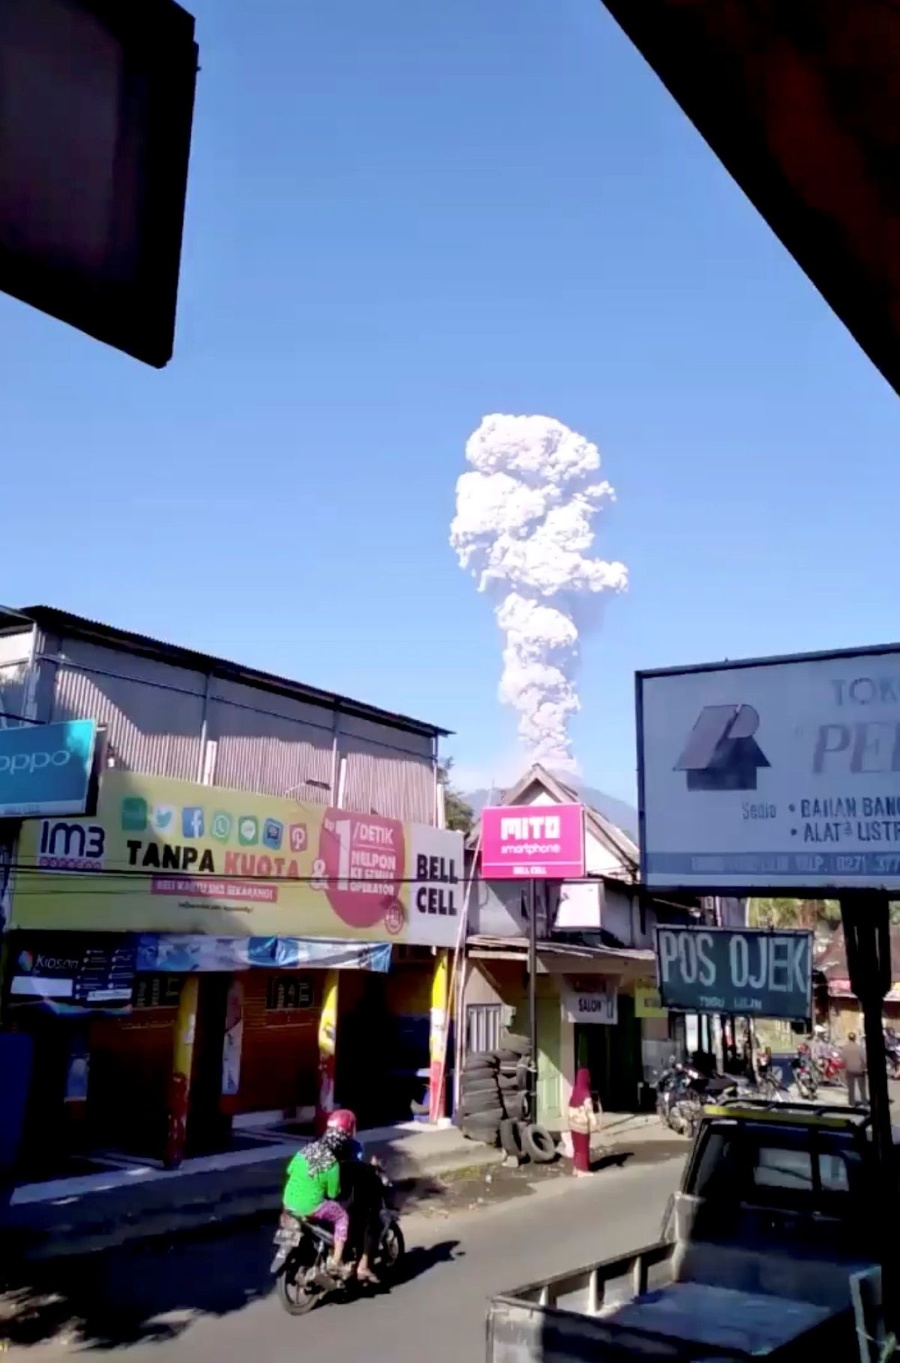 Indonézska sopka Merapi sa